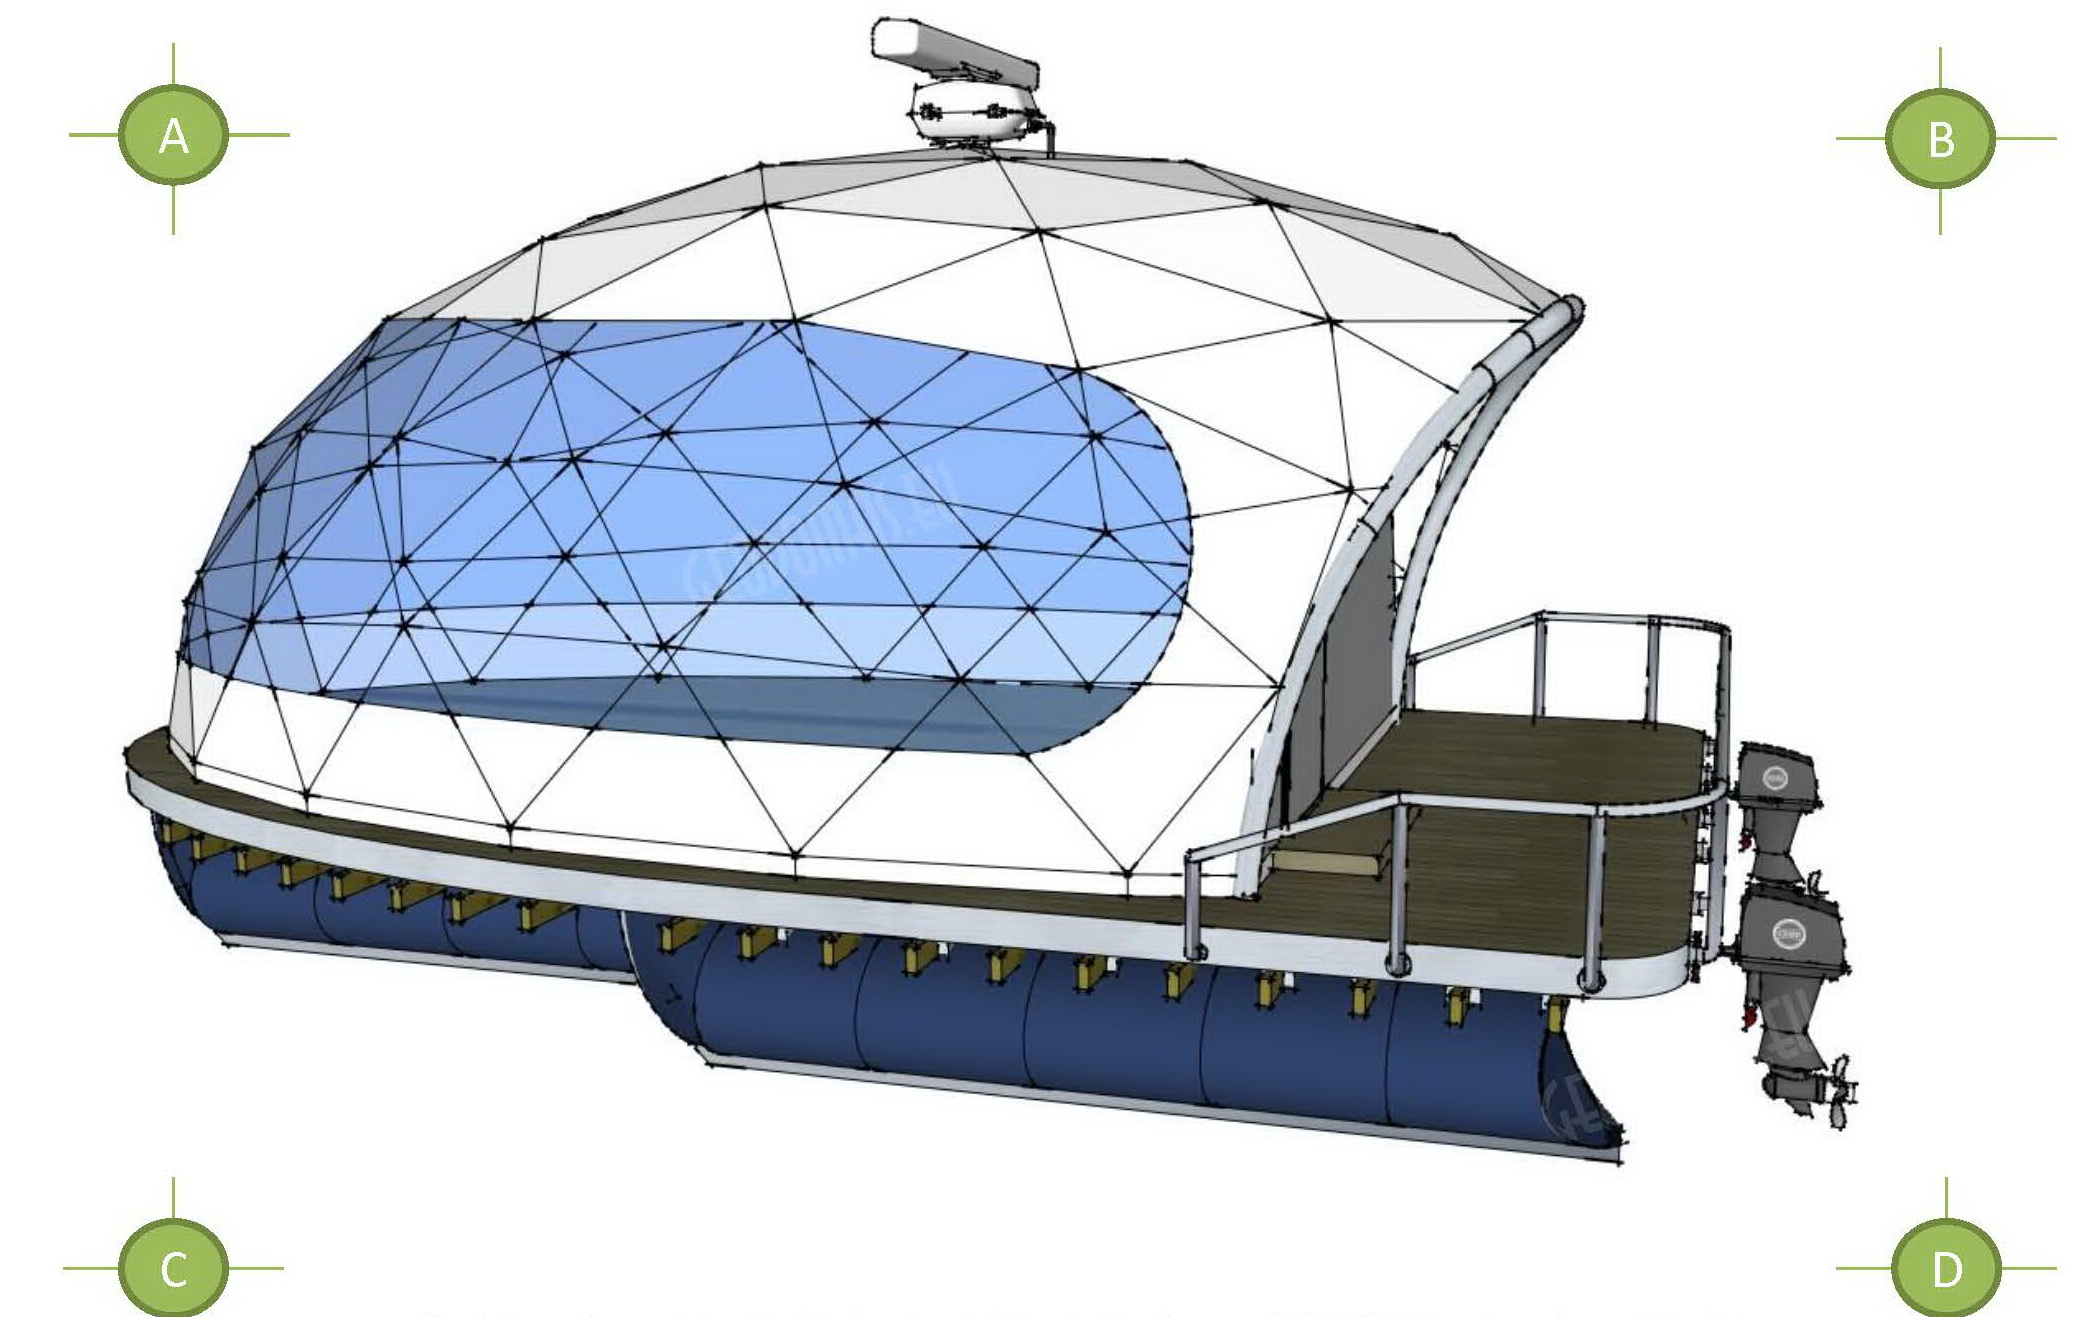 27m² Luxury Glamping Yacht | Floating Dome Ø7m, Trakai LT